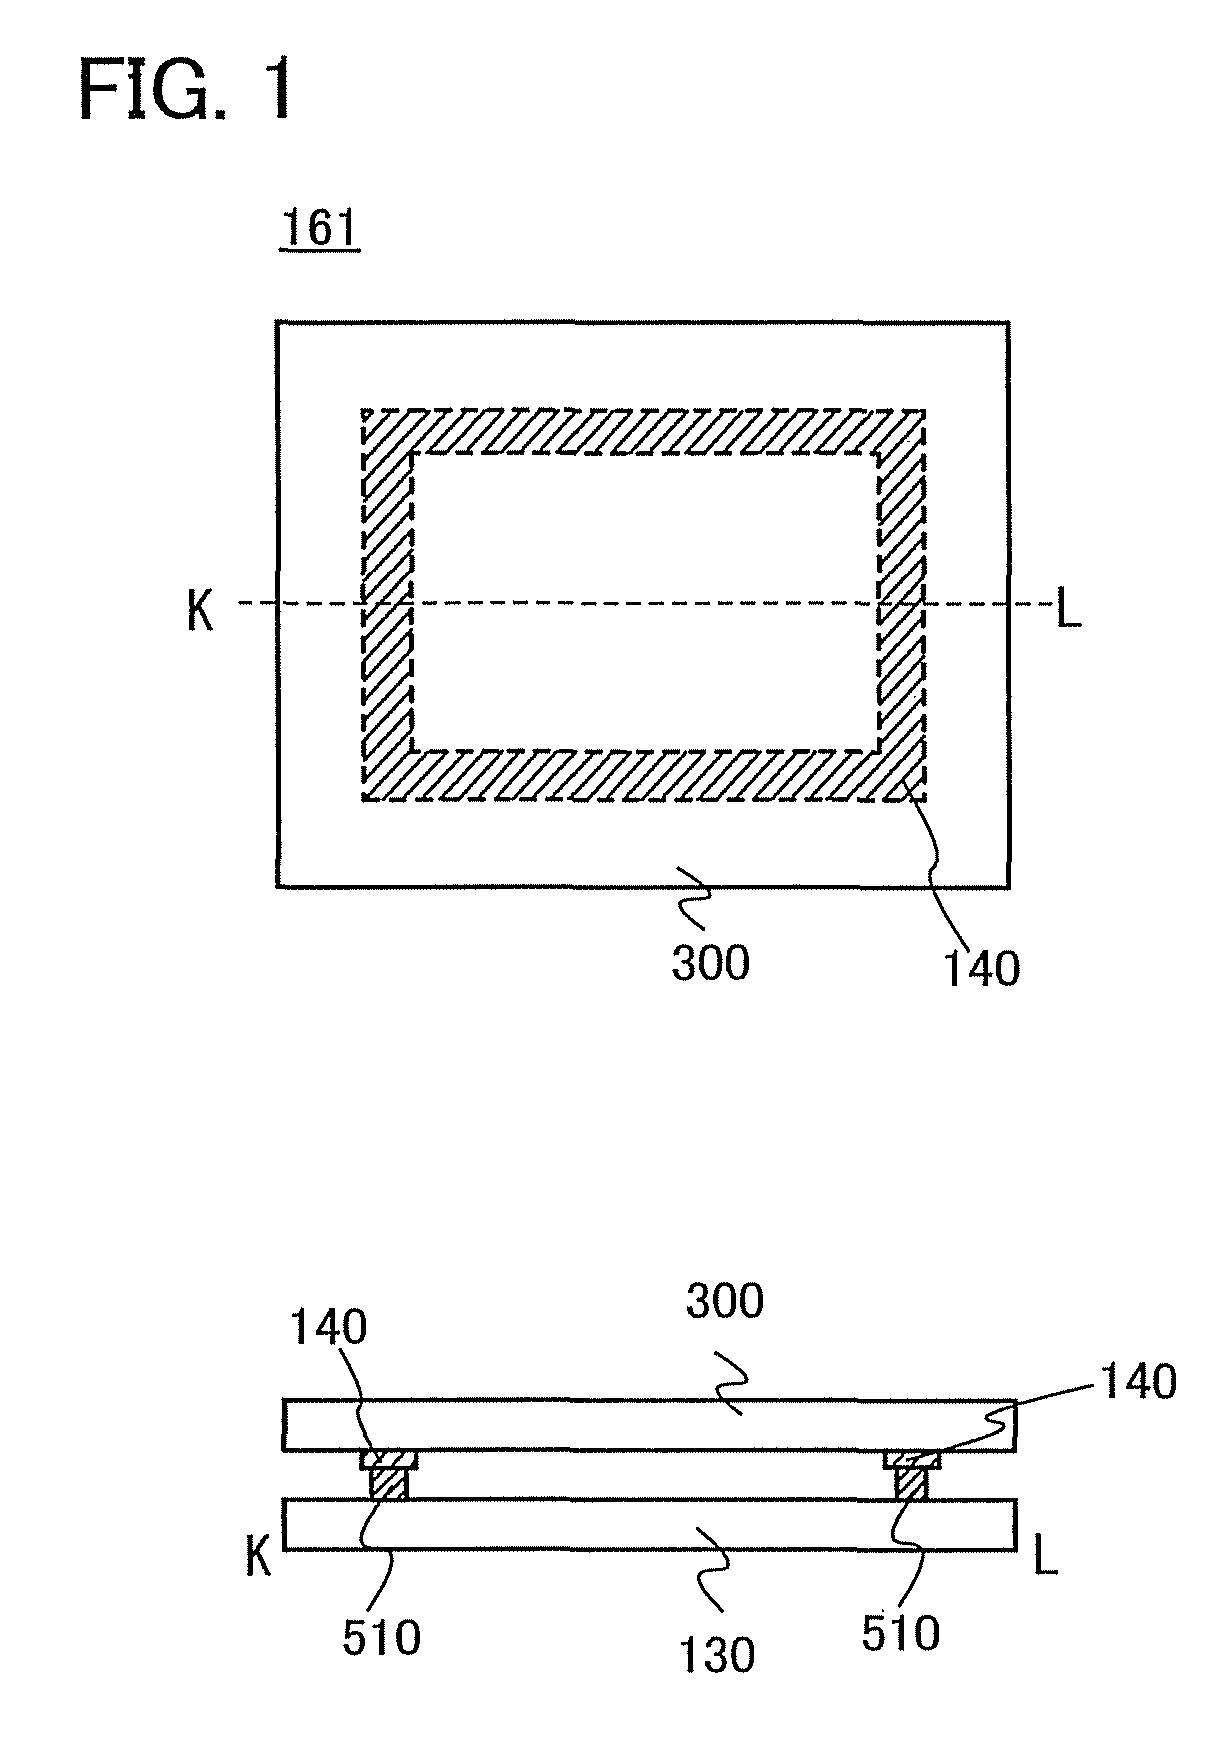 Method of manufacturing light-emitting device